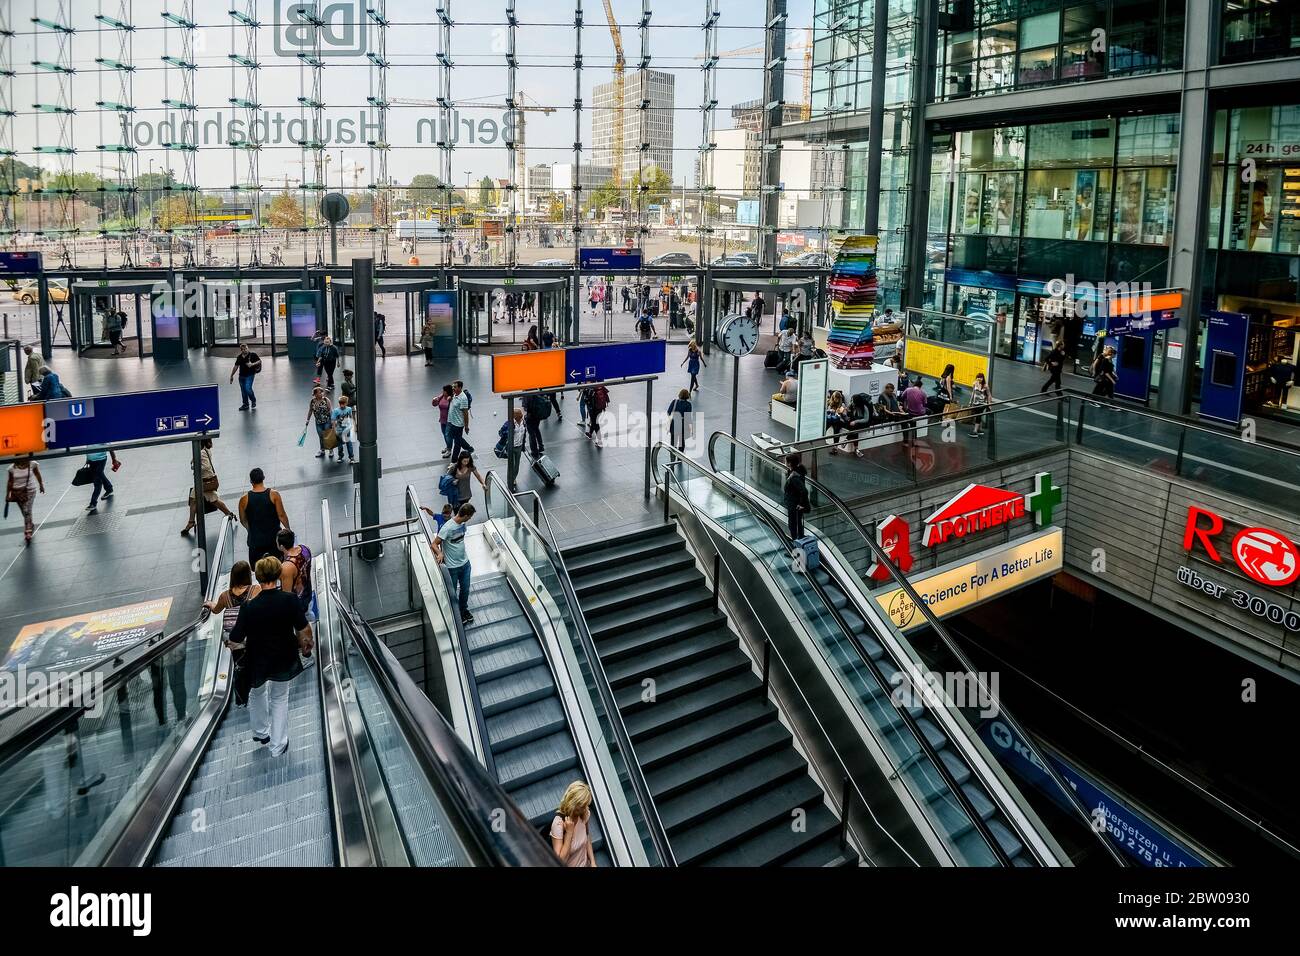 The central train station in Berlin. Berlin - Hauptbahnhof. Modern glass architecture.  Stock Photo